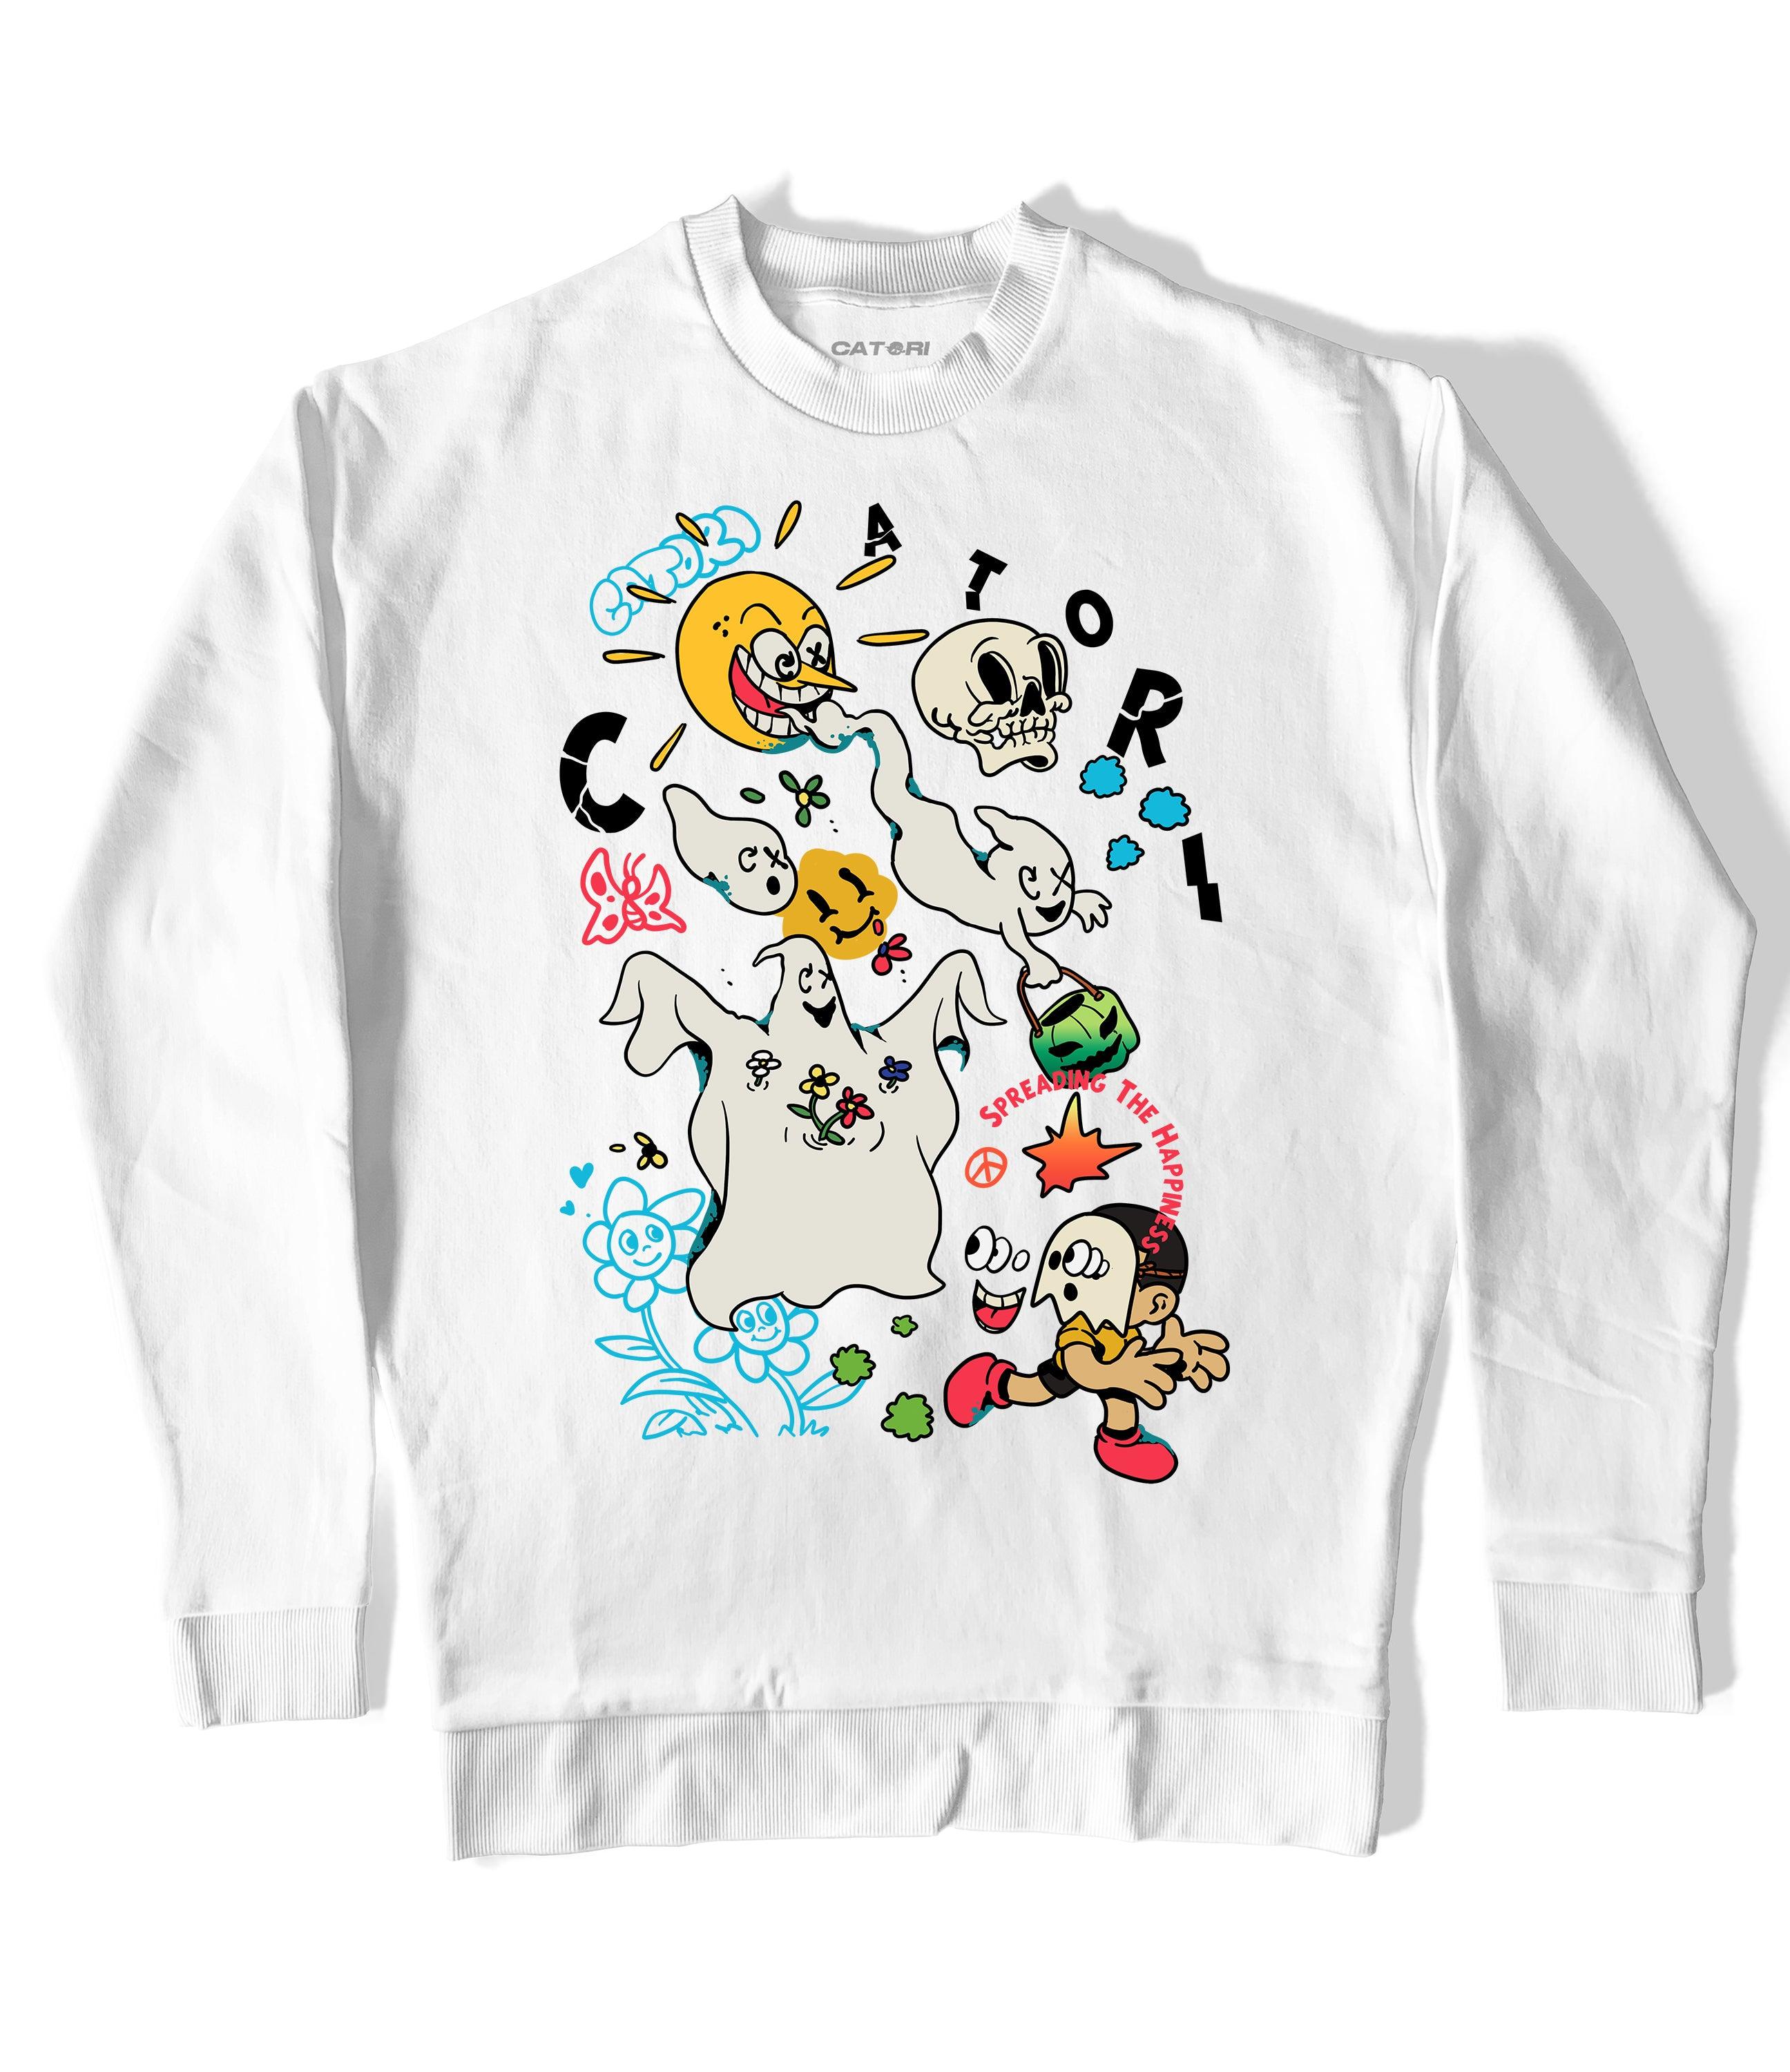 Happiness Sweatshirt at Catori Clothing | Graphic & Anime Tees, Hoodies & Sweatshirts 